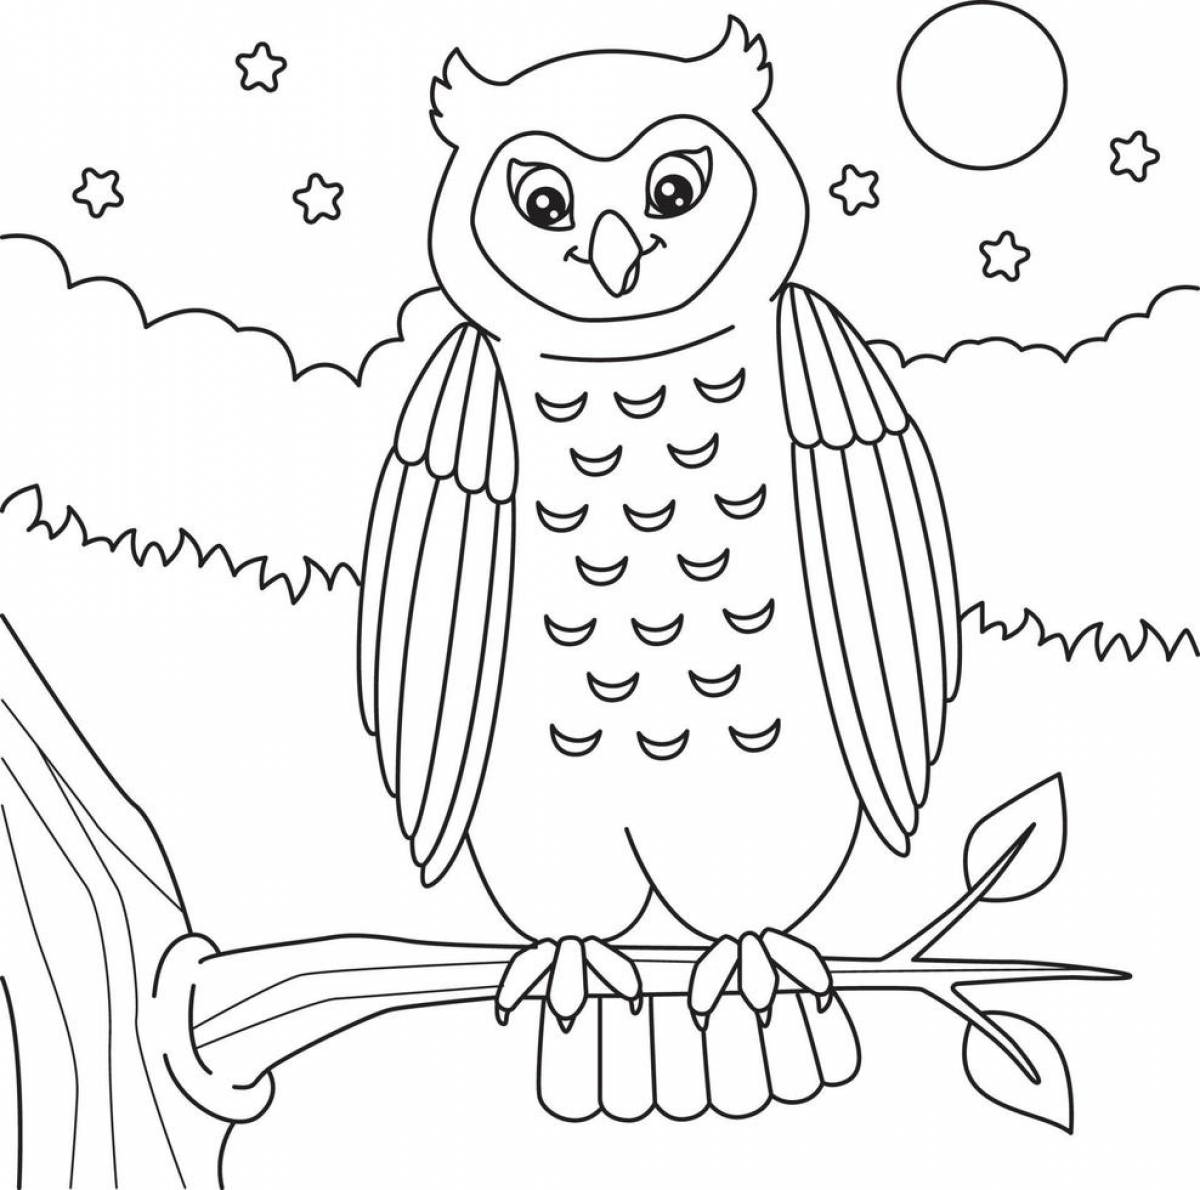 Fairytale coloring owl bianca